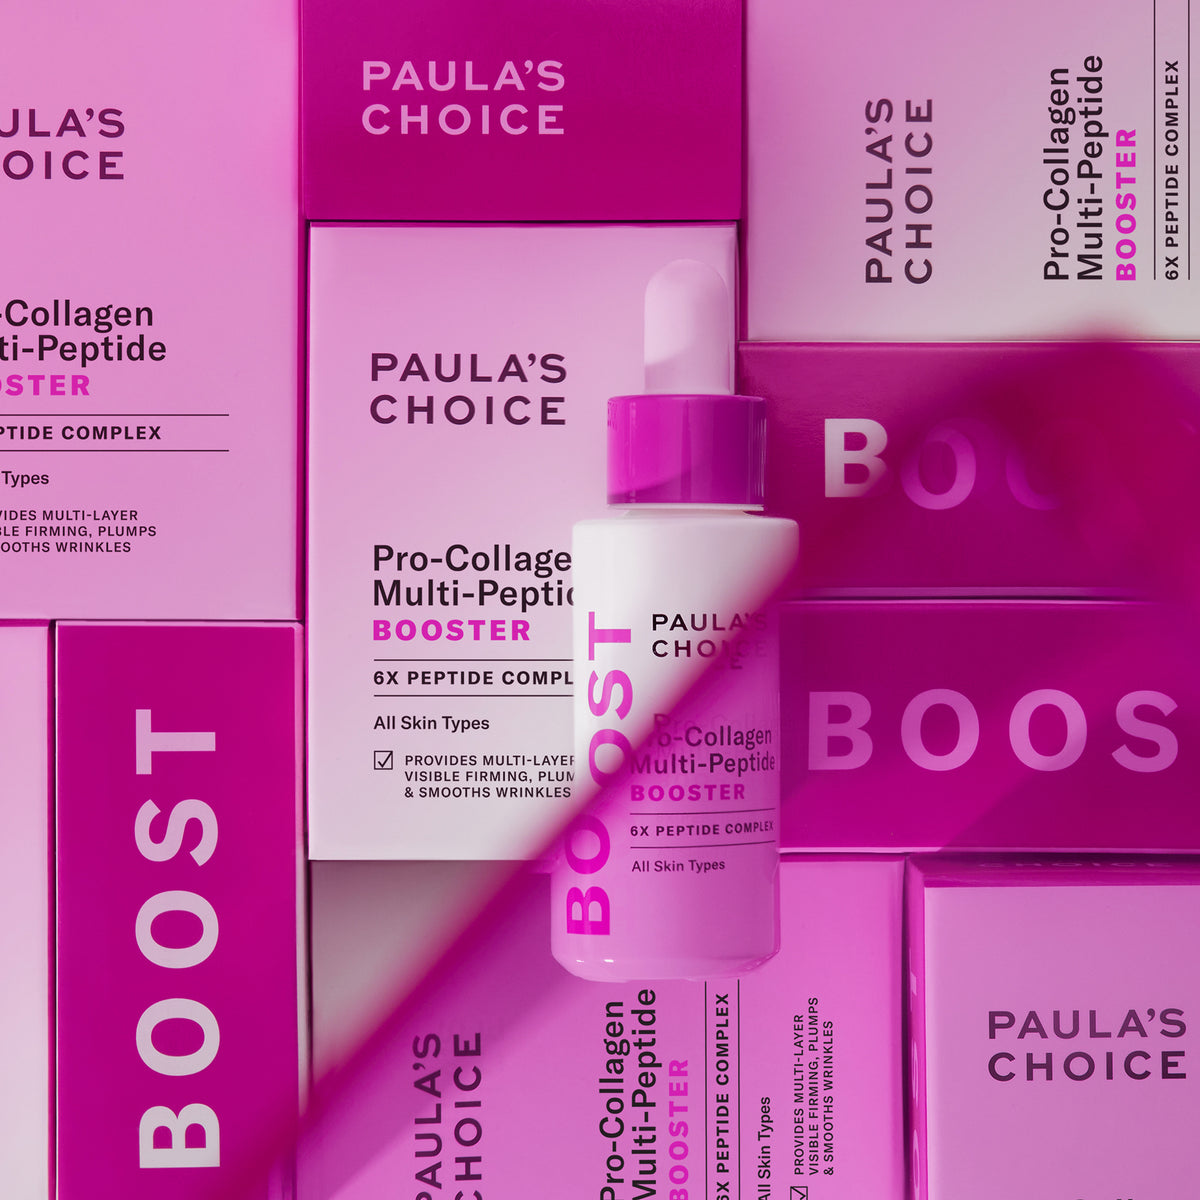 Paula's Choice | Pro-Collagen Multi-Peptide Booster